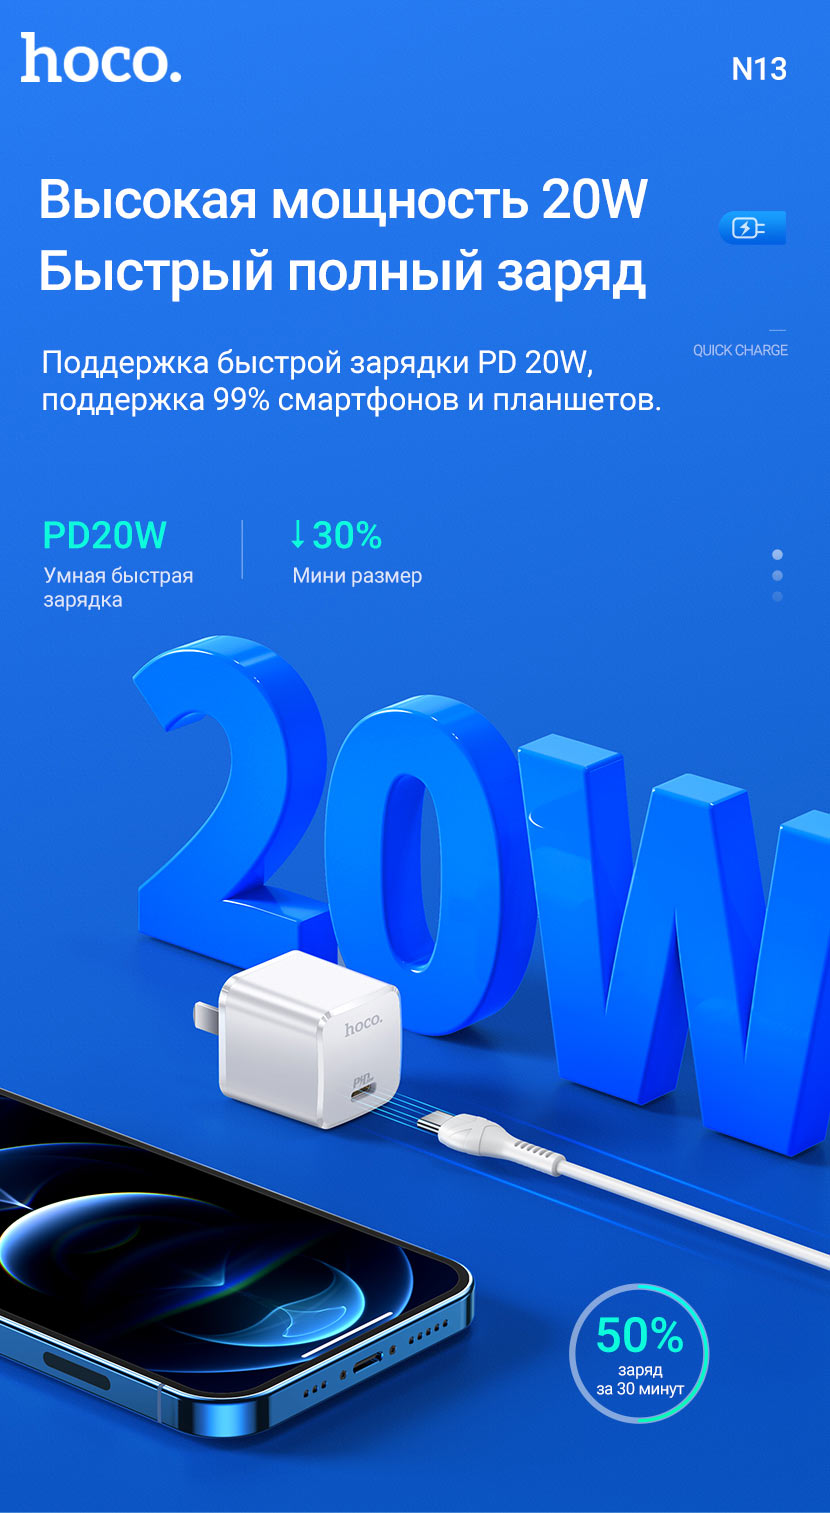 hoco news n10 n13 starter single port pd20w wall charger high power ru